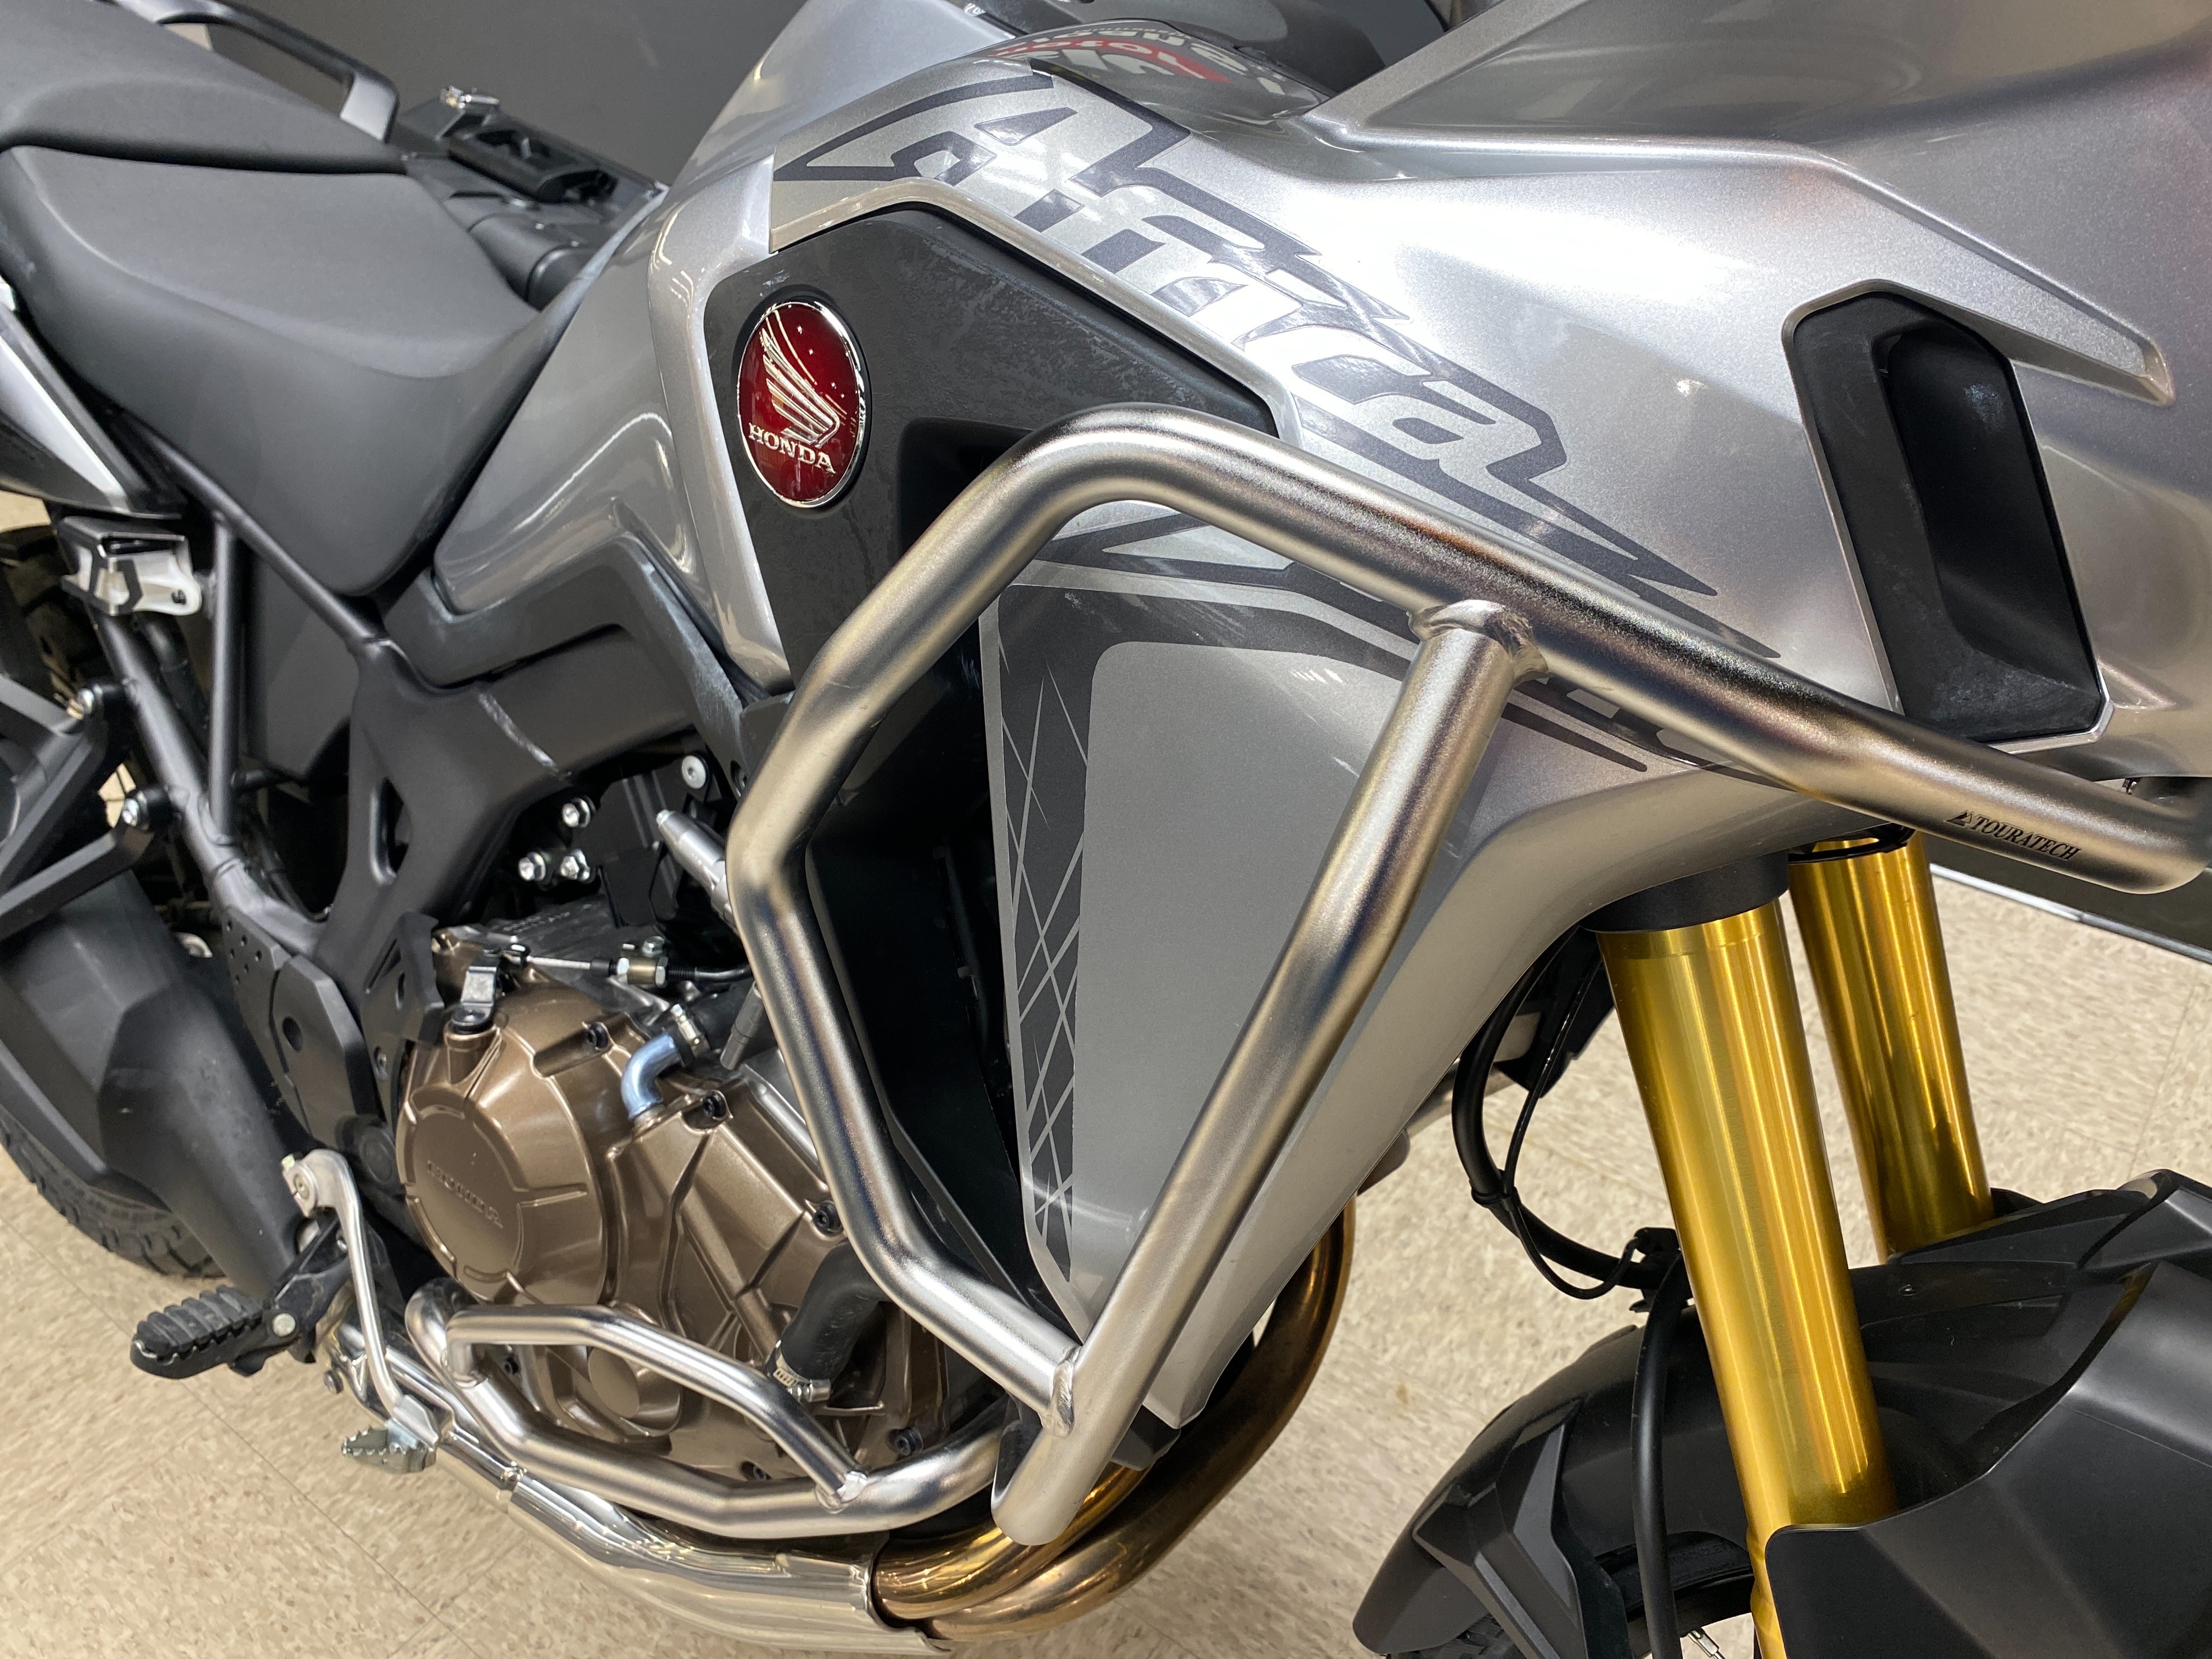 2016 Honda Africa Twin Base at Sloans Motorcycle ATV, Murfreesboro, TN, 37129